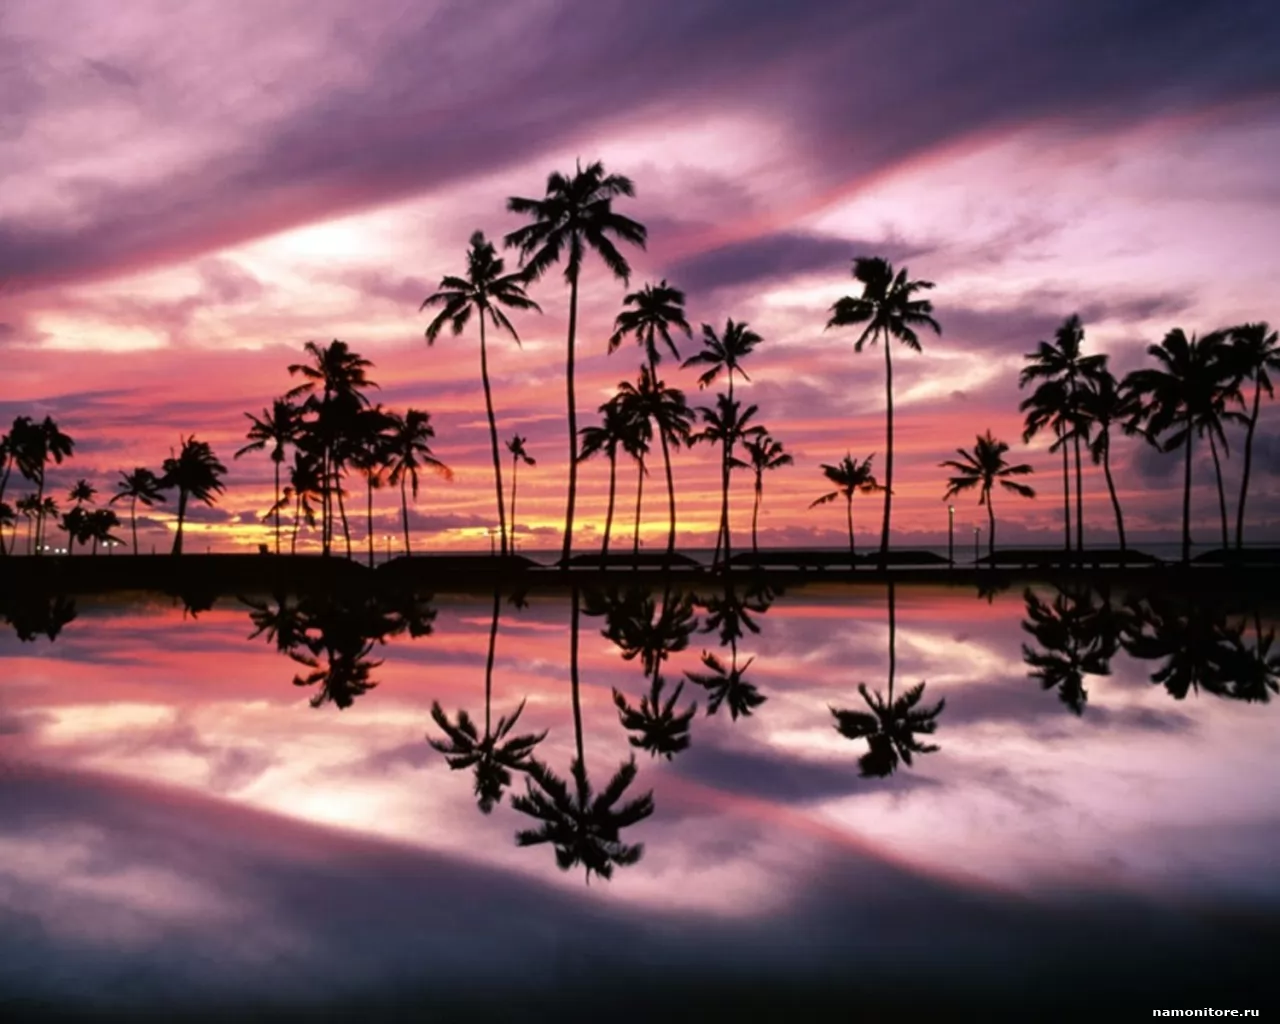 Honolulu, Oahu, Hawaii, Америка, море, остров, пальмы, пейзажи, побережье, природа, сиреневое, тропики х